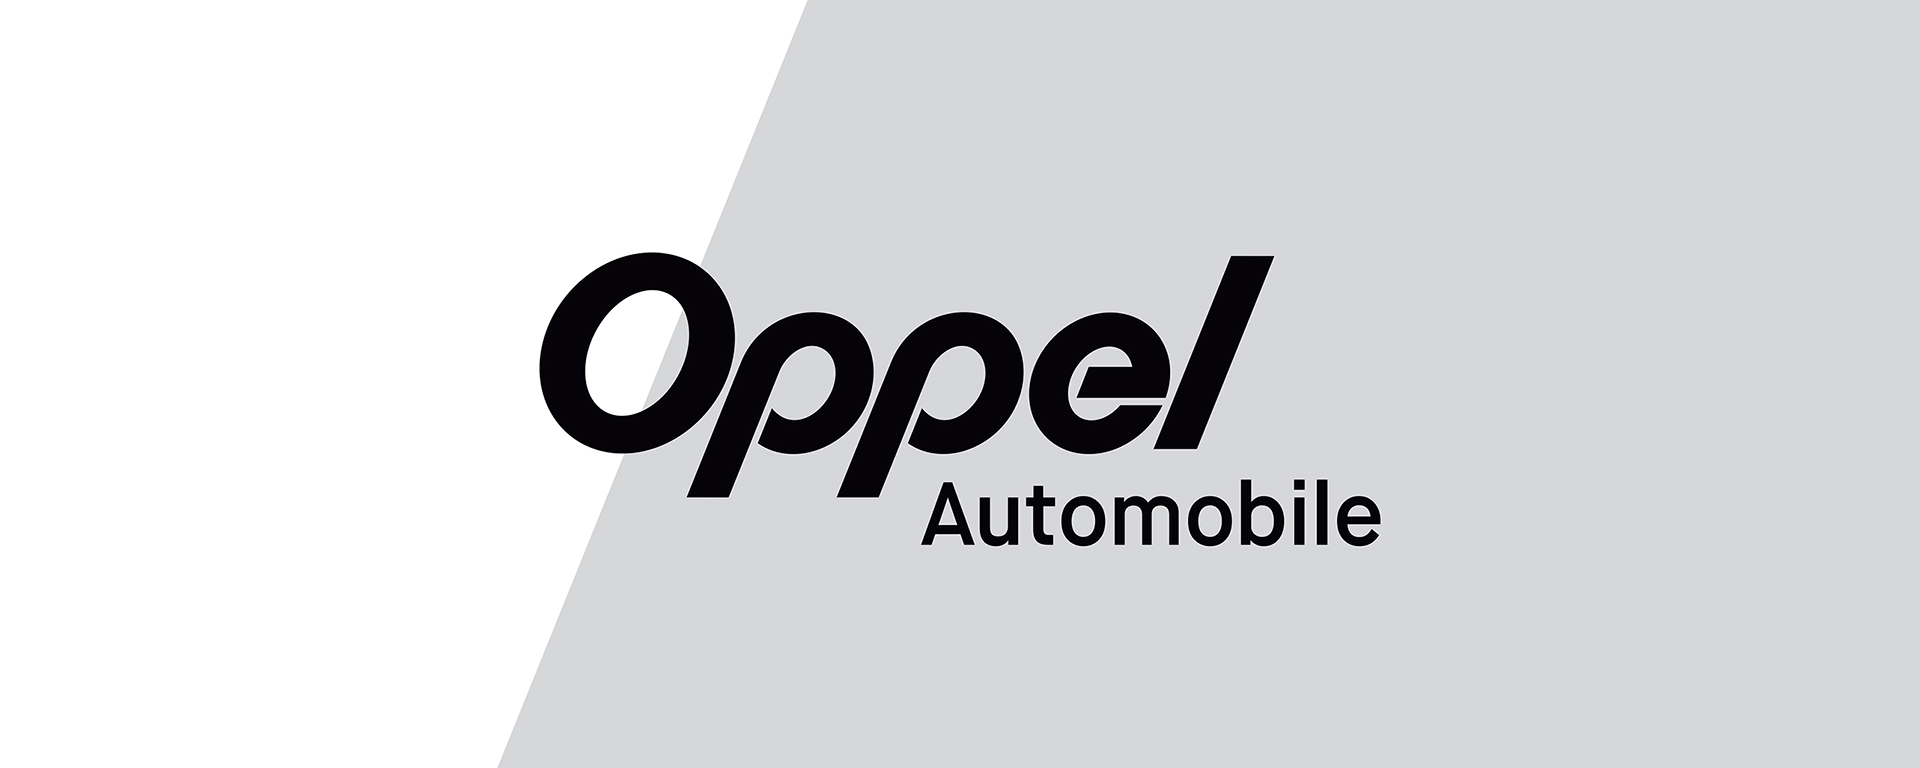 Oppel Automobile – Corporate Design Autohaus, Header